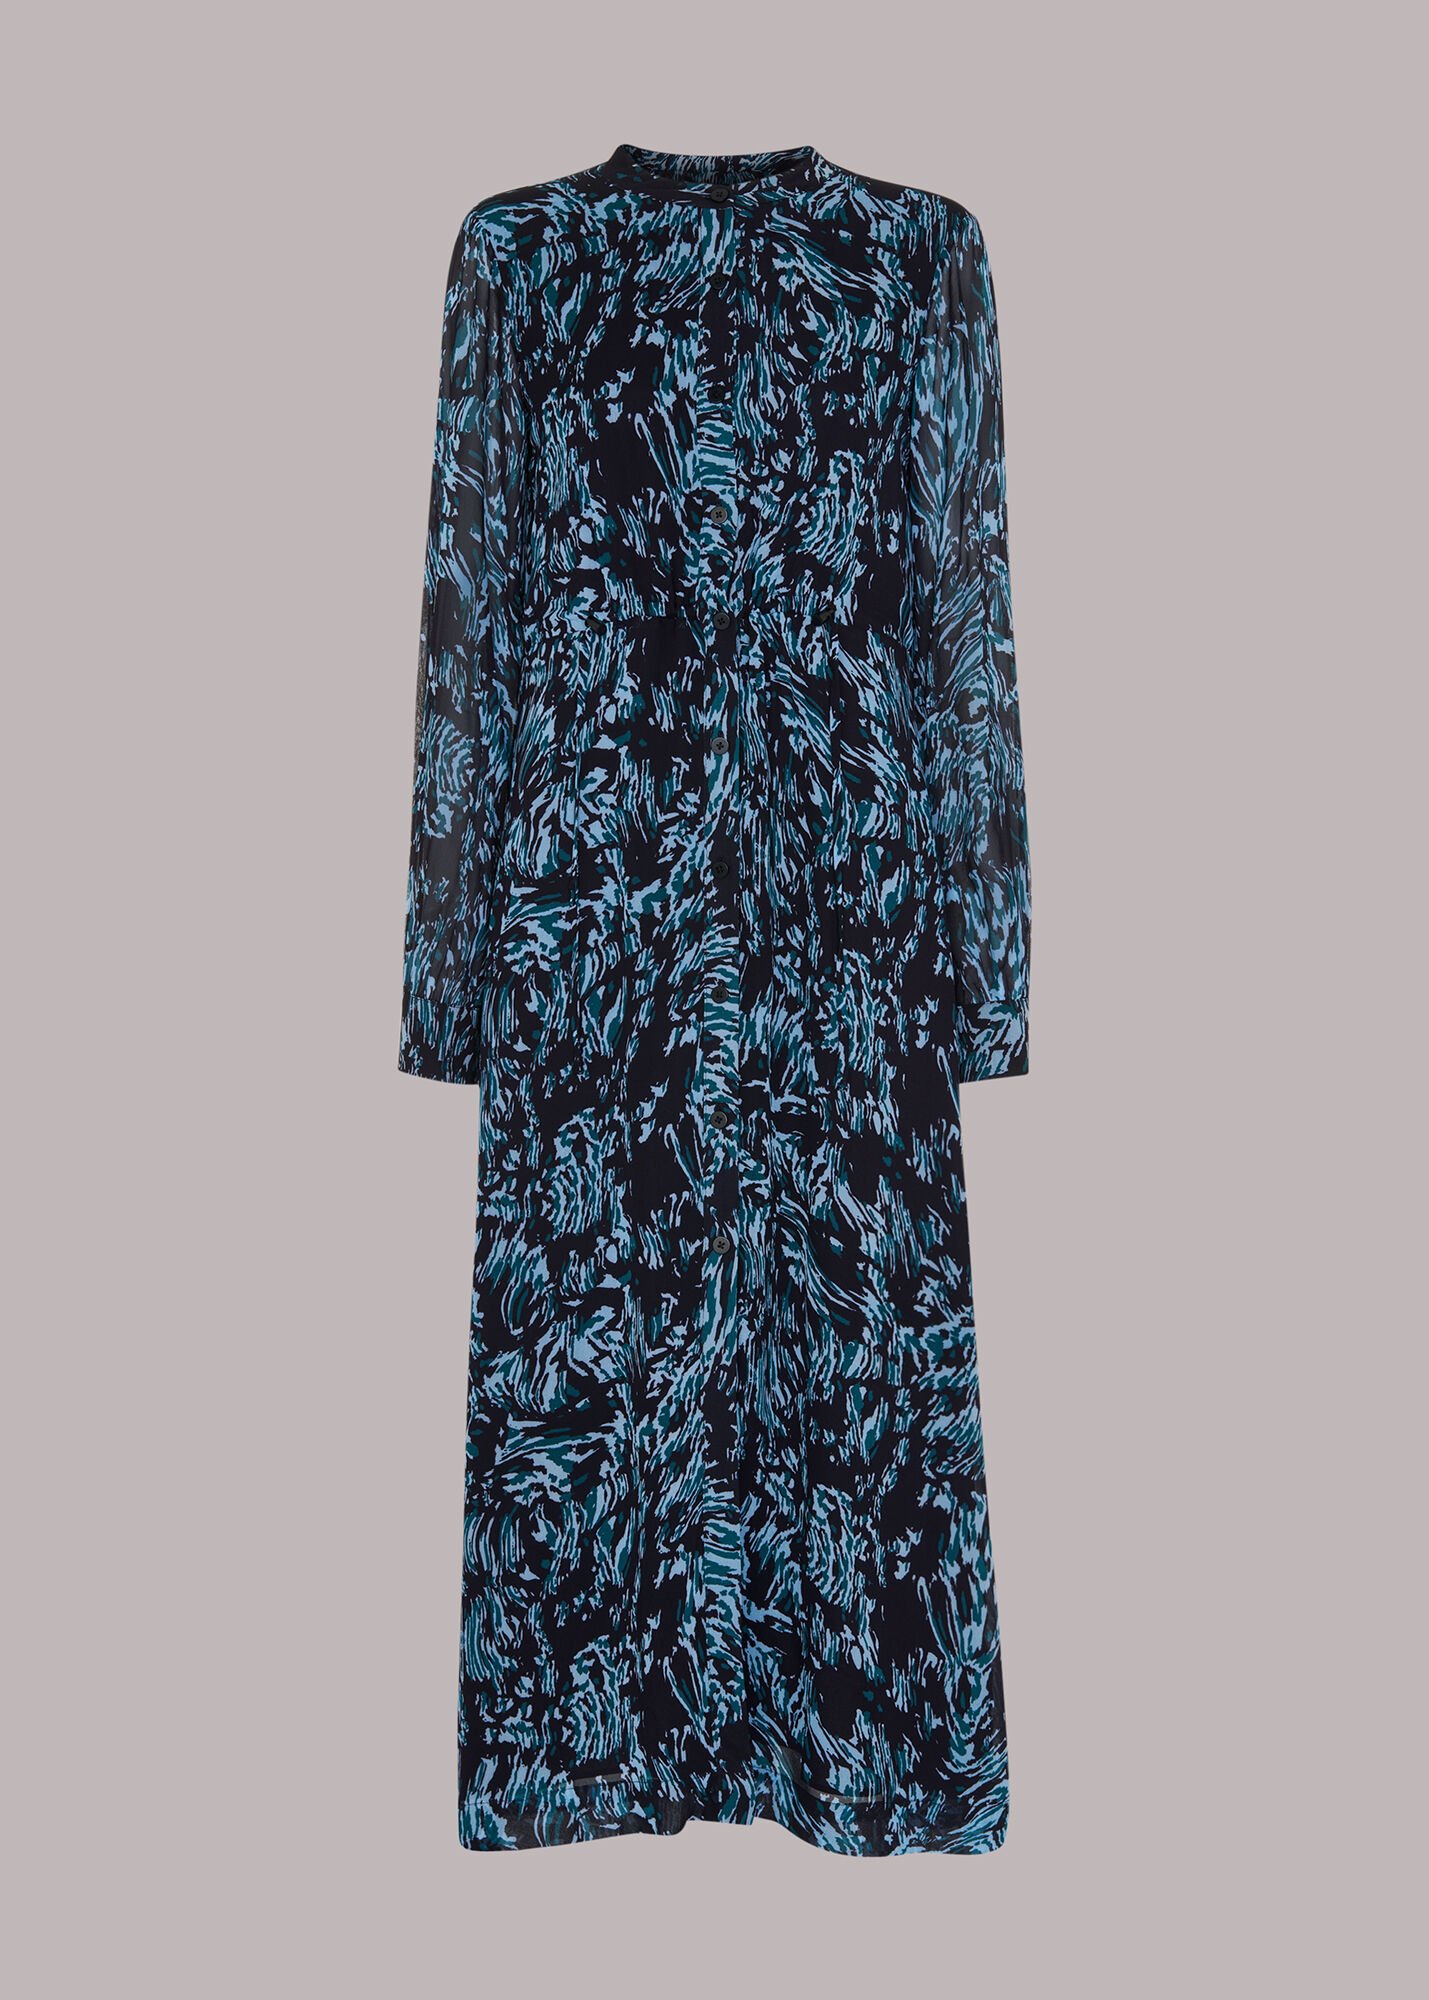 Whistles Wood Tiger Print Midi Dress in Blue.jpg